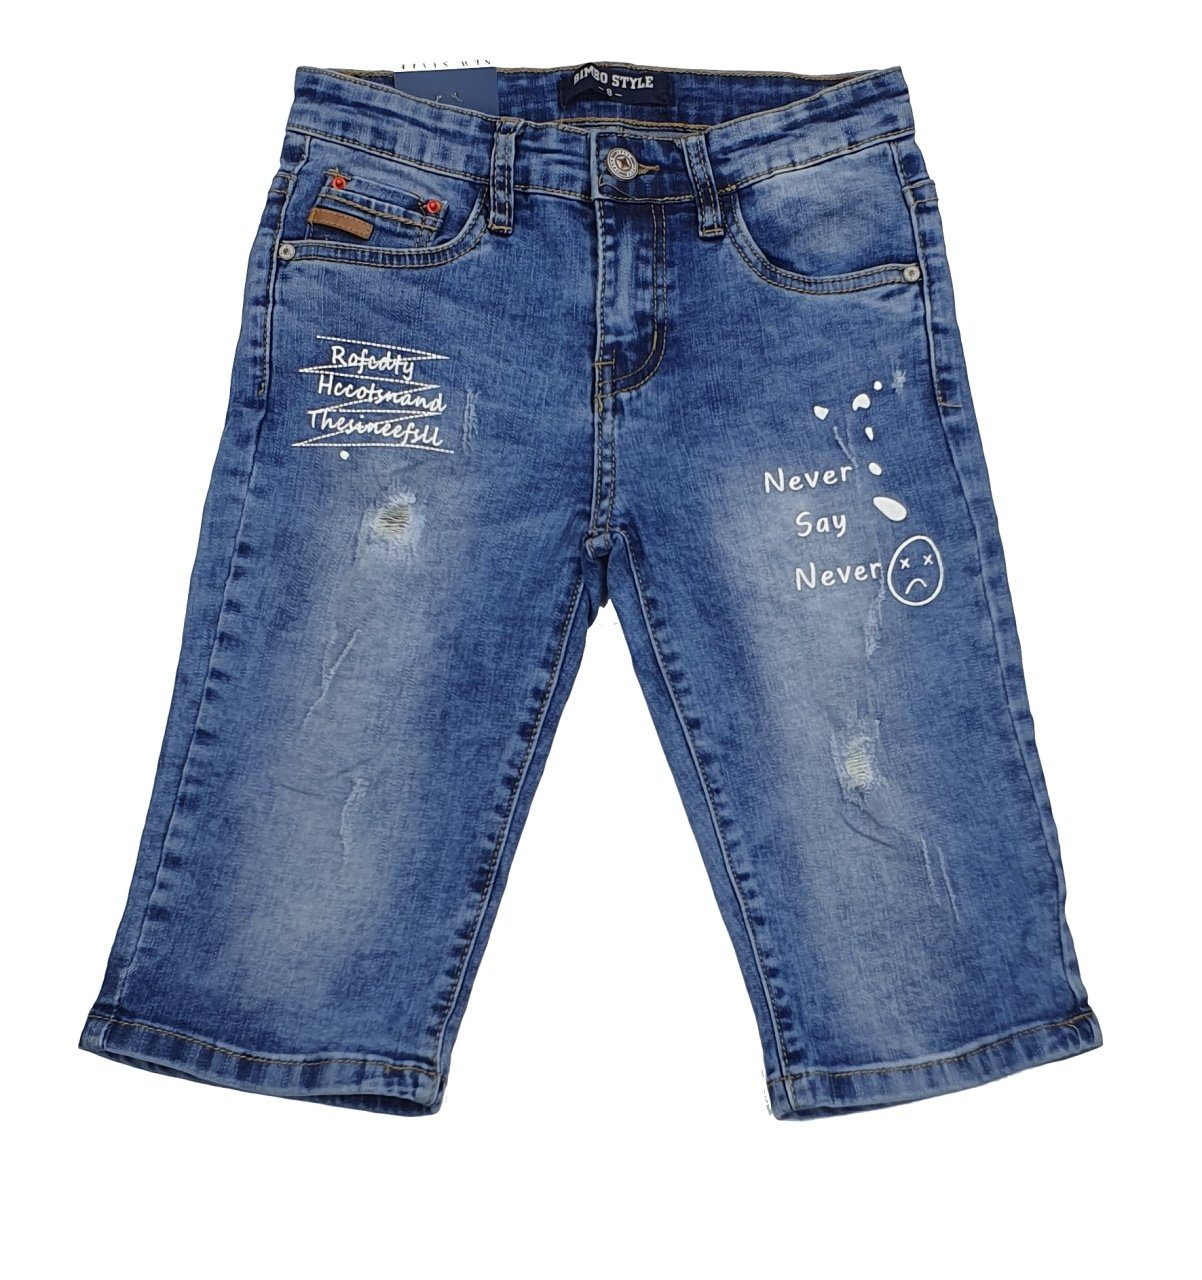 Fashion Boy Jeansbermudas Jungen Bermuda Jeans Shorts Sommerjeans Stretch, J306